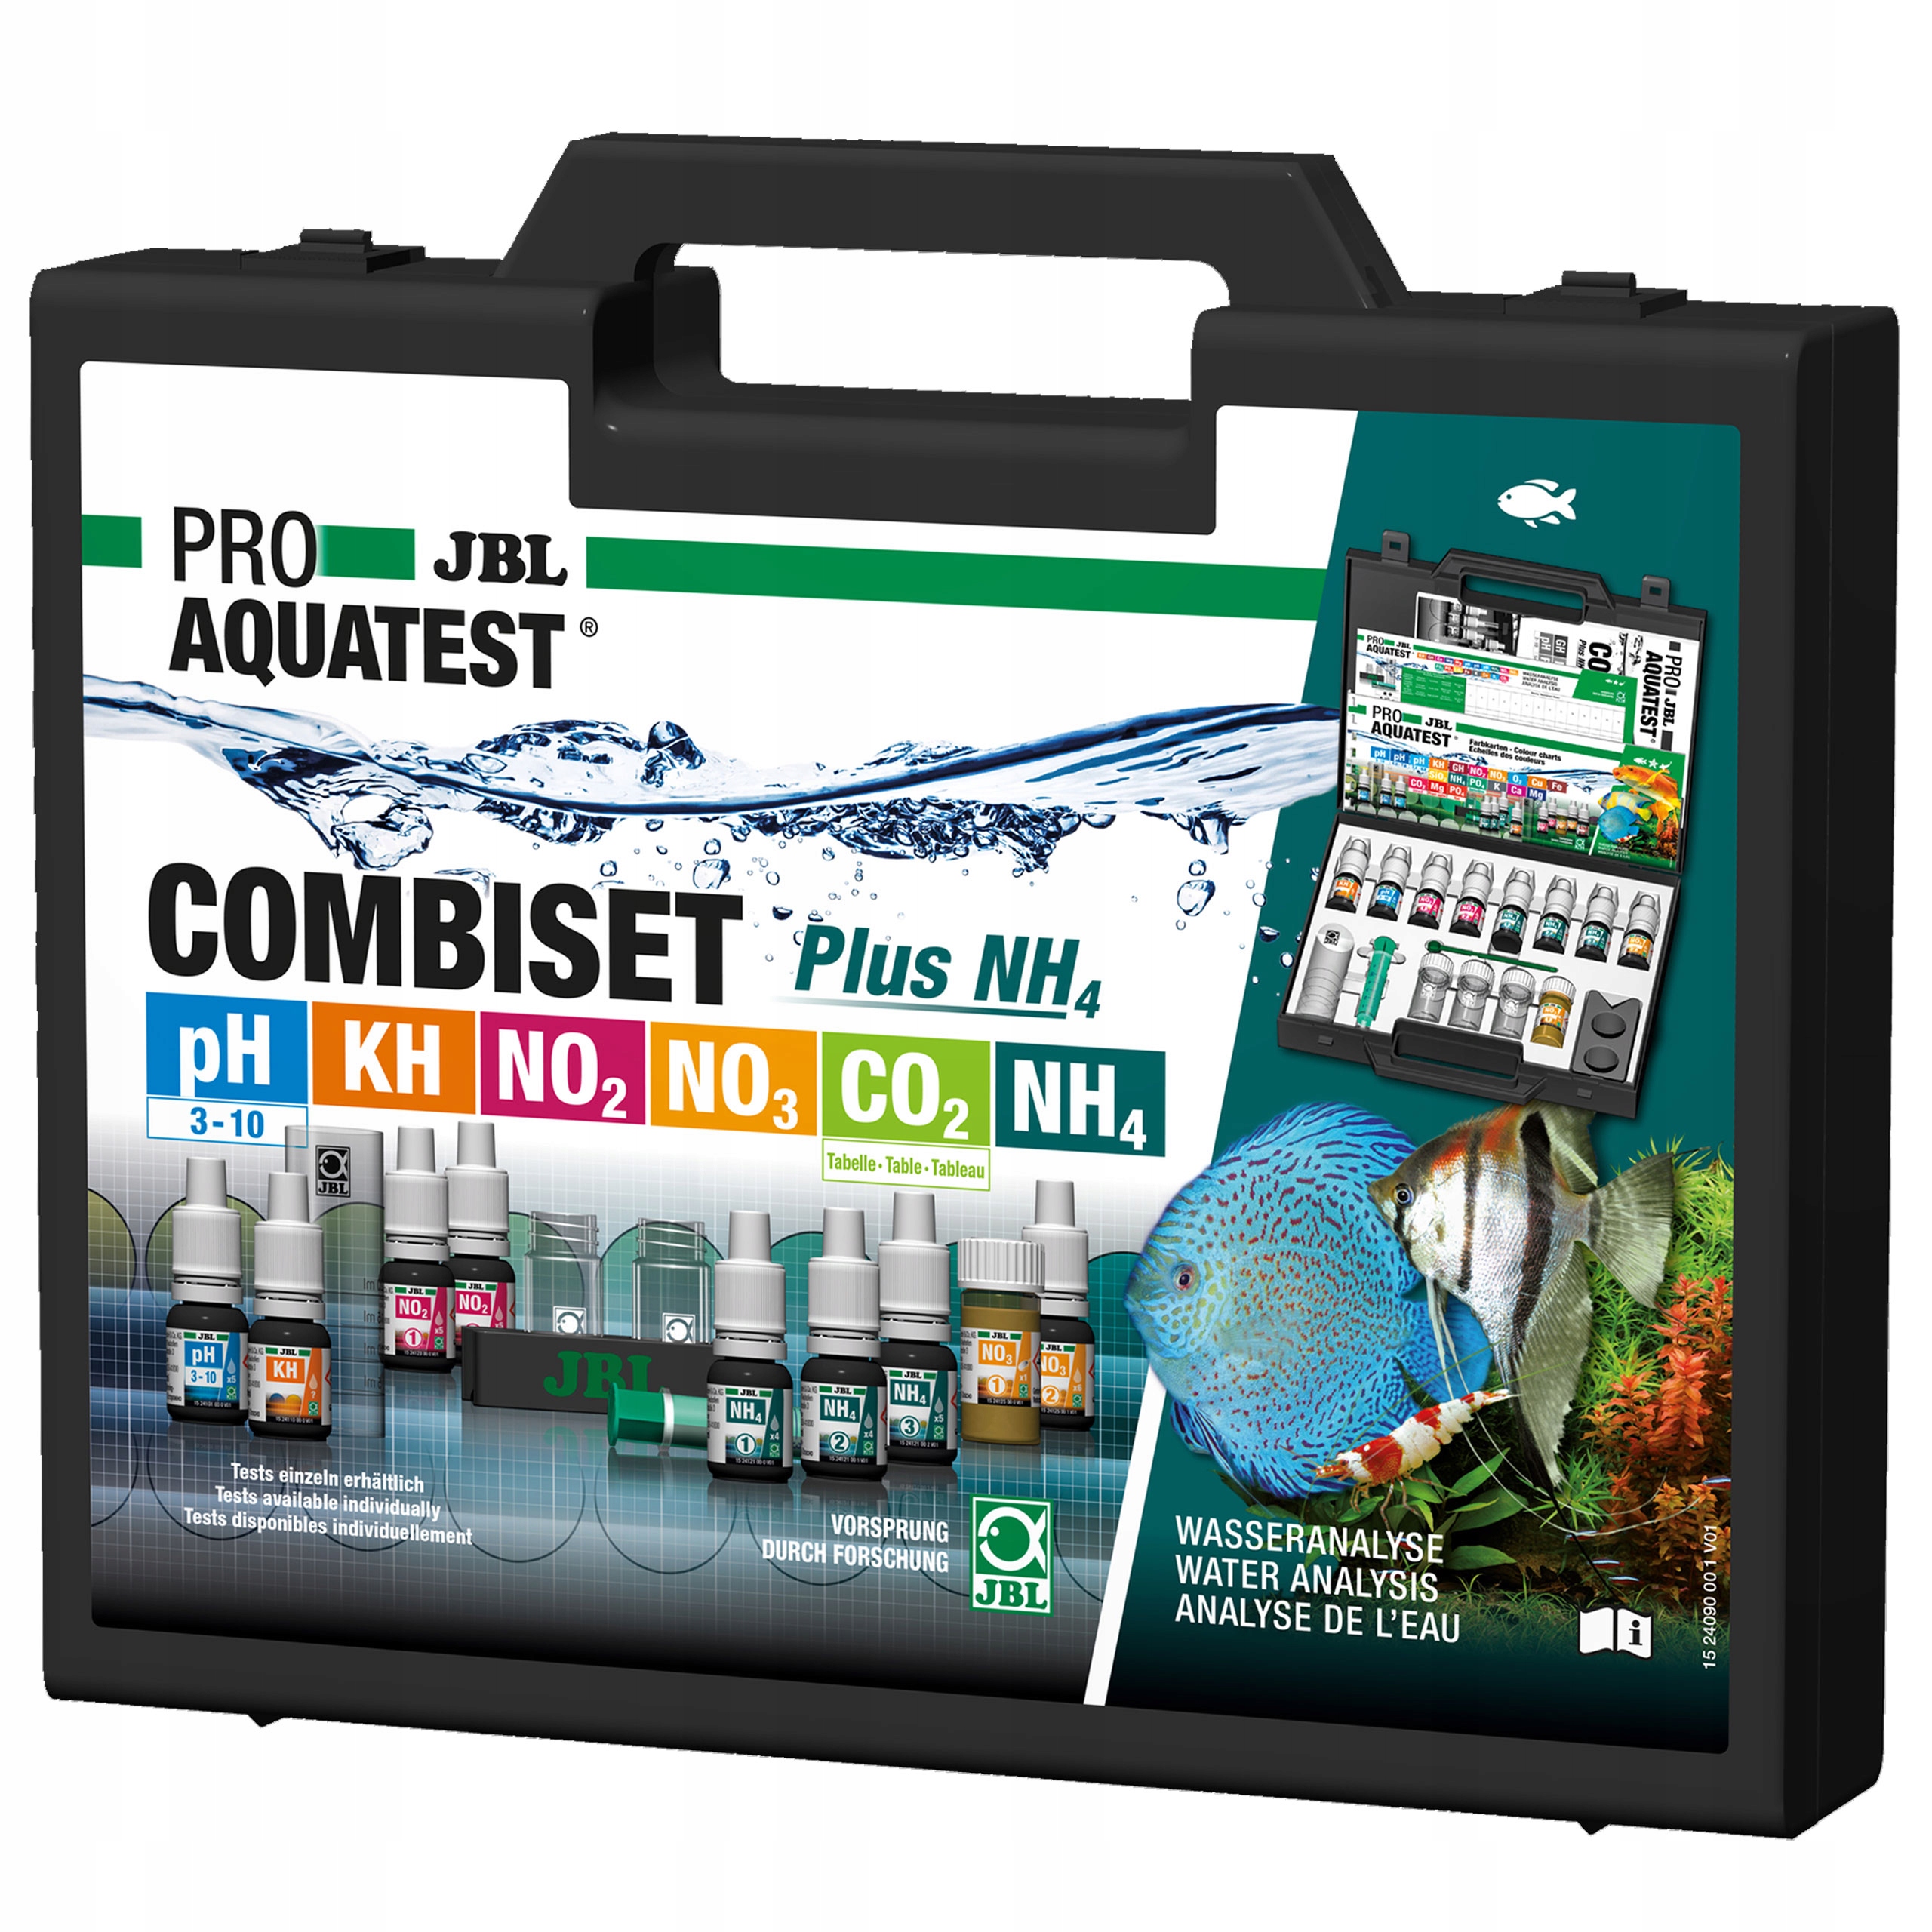 Тест воды для аквариума купить. Aquatest JBL. Aquatest JBL no3. Pro JBL Aquatest Refill. Тест для аквариумной воды JBL.